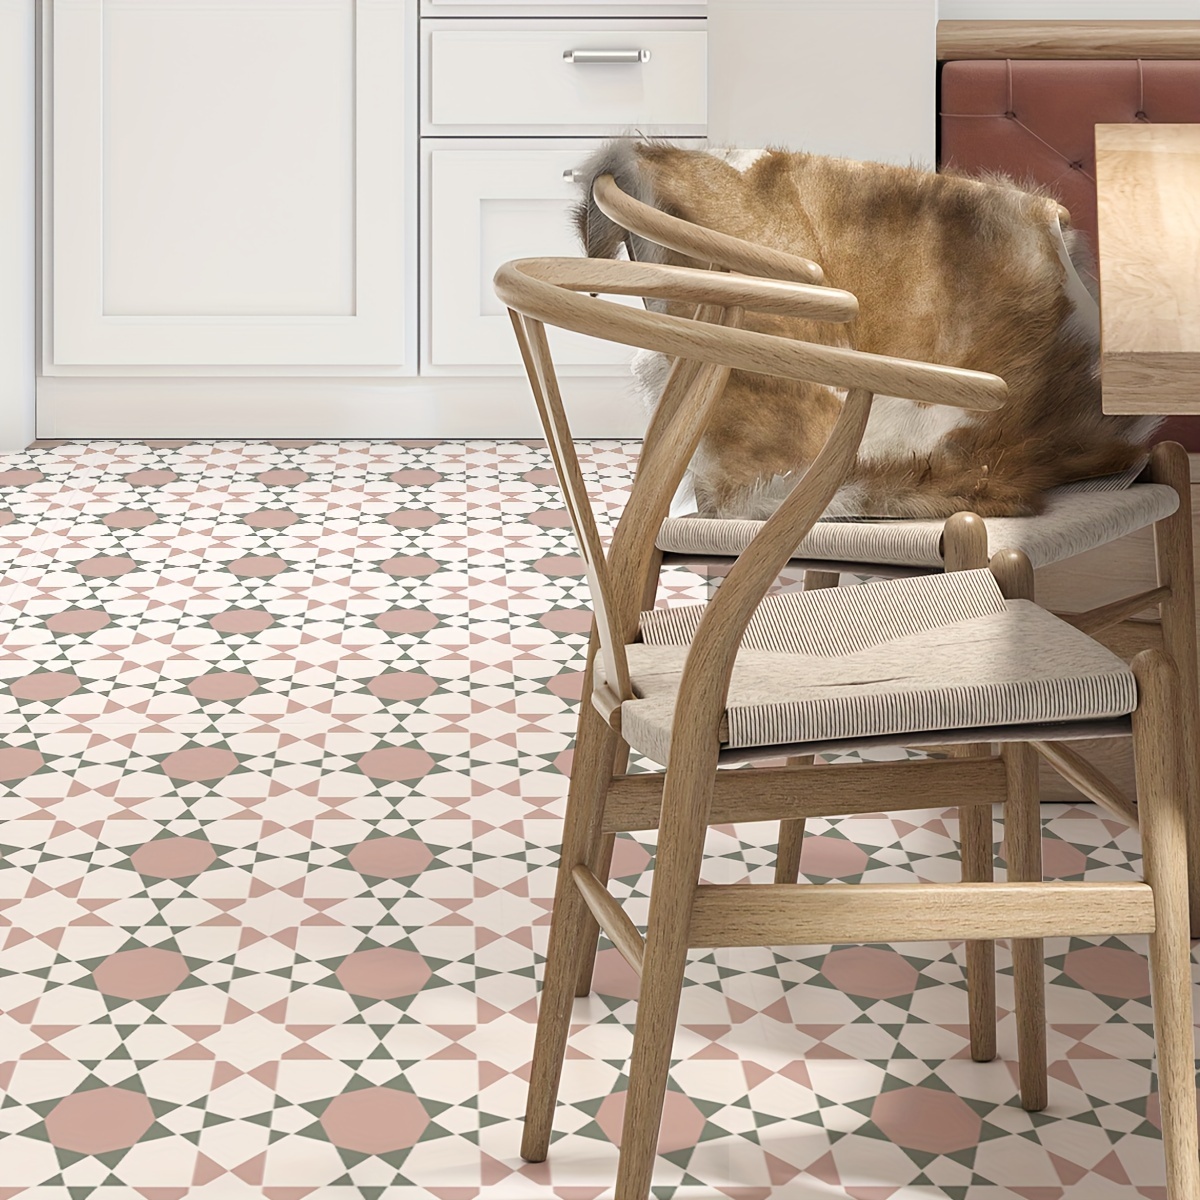 

9-piece Pink Peel & Stick Floor Tiles - Waterproof, Non-slip Vinyl Decals For Easy Home Decor In Bedroom, Kitchen, Living Room, And More - 7.87x7.87 Inches